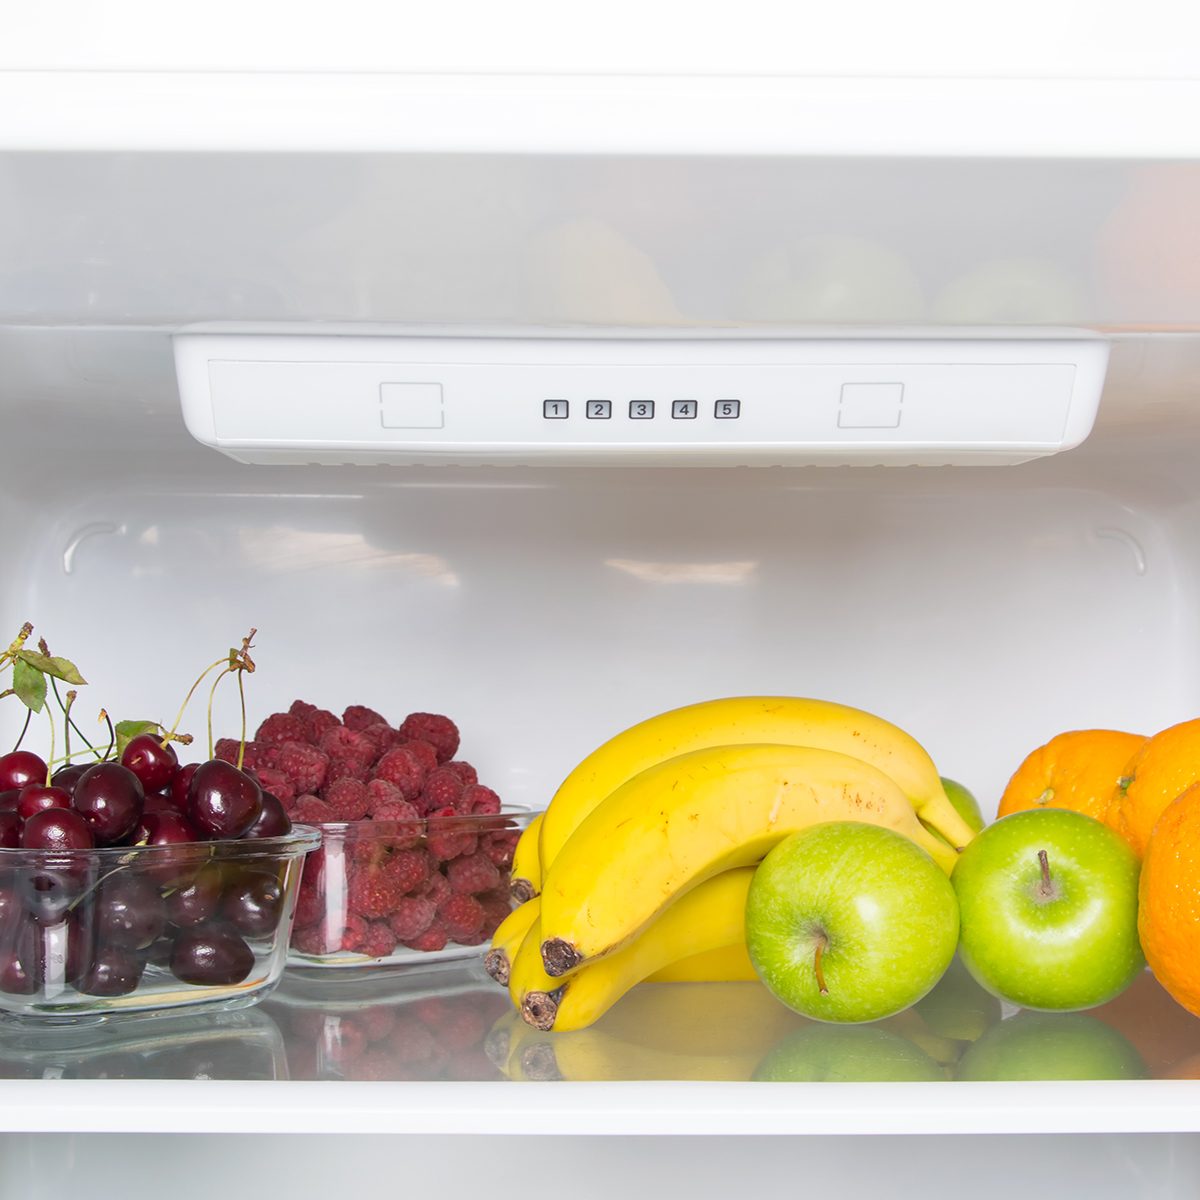 White refrigerator shelf close-up, fruits and berries, raspberries and cherries